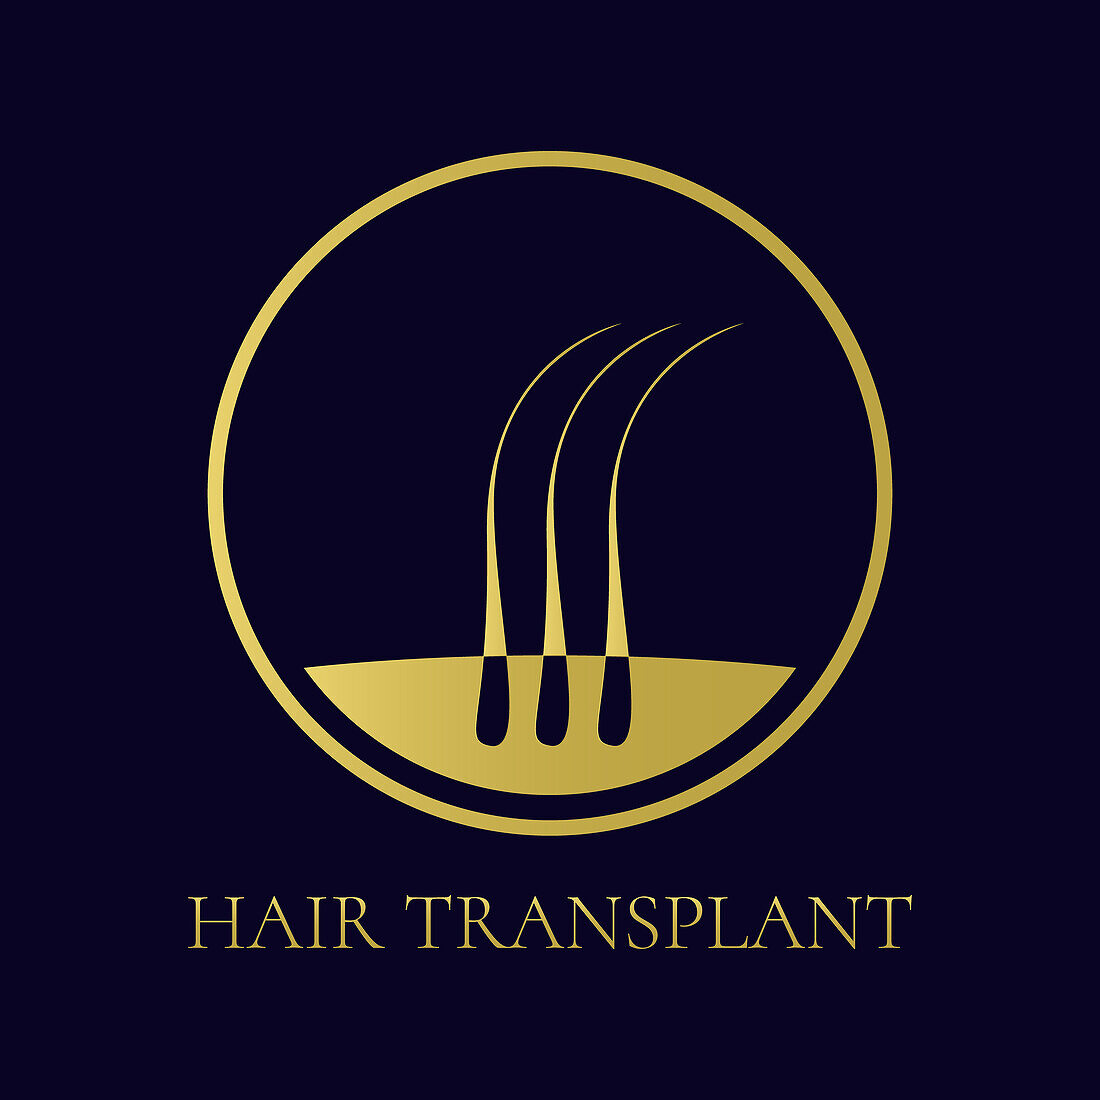 Hair transplant, conceptual illustration